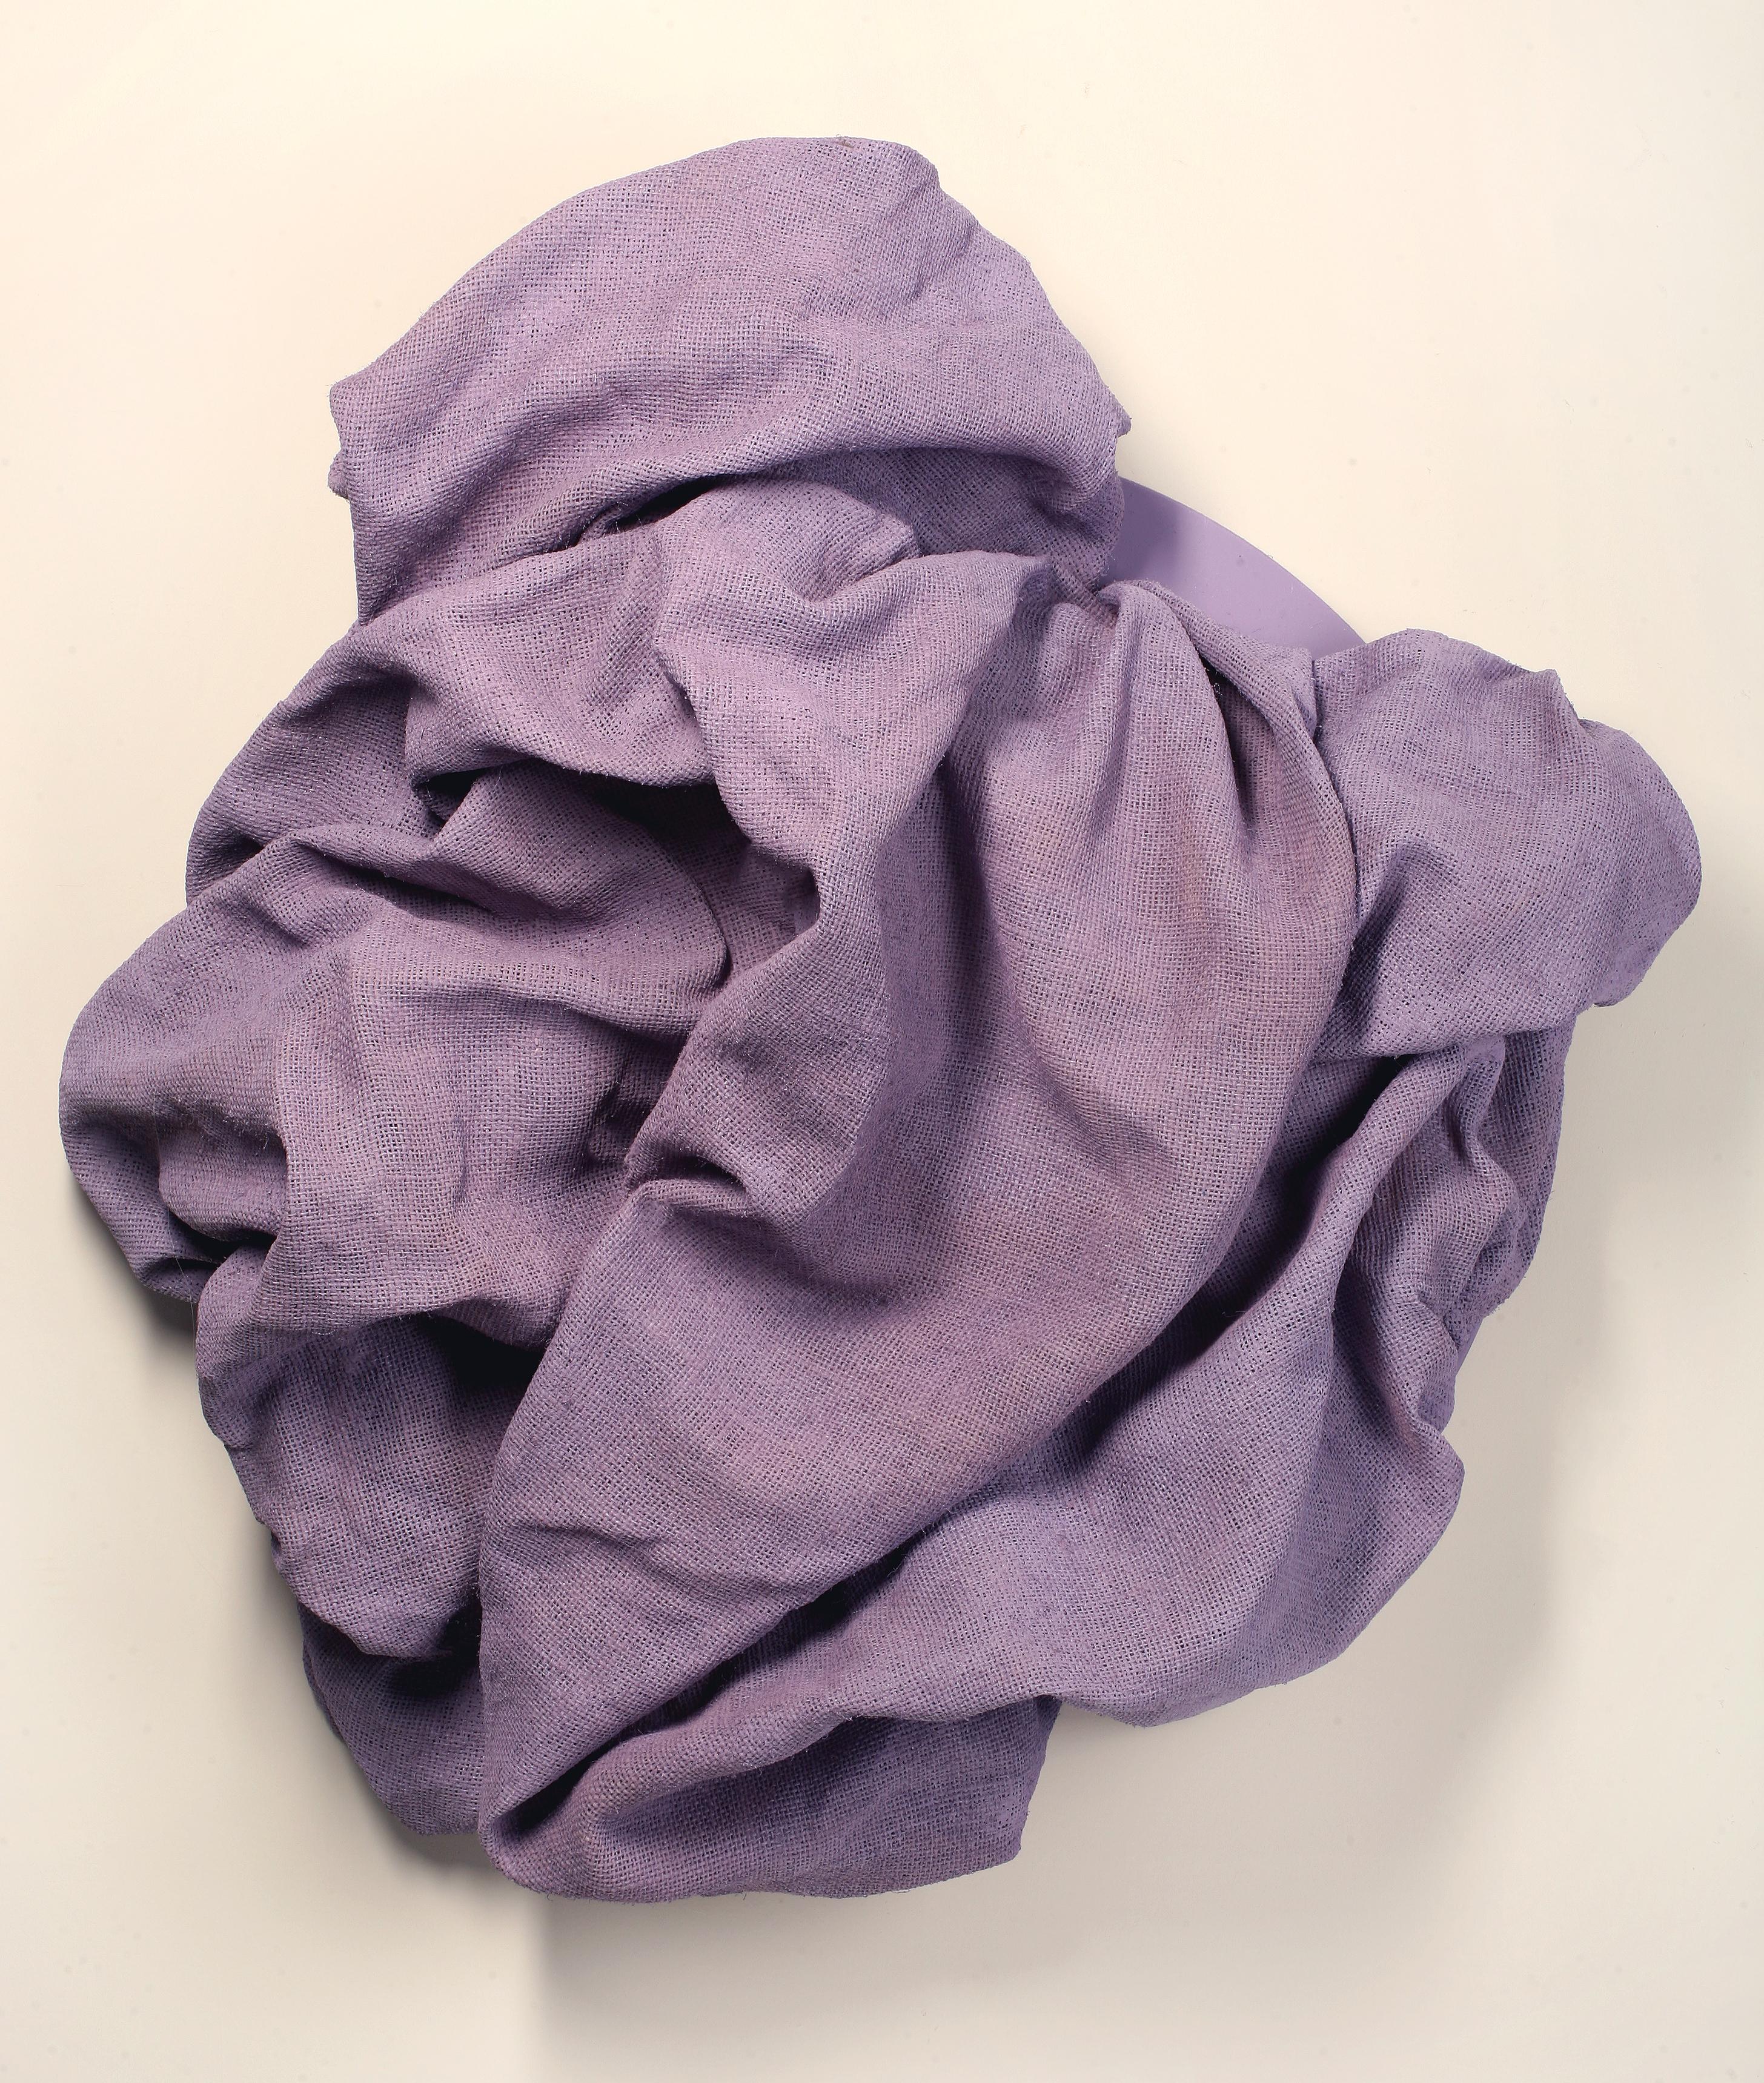 Abstract Sculpture Chloe Hedden - Sculpture murale "Lavender Folds" - tissu, monochrome, violet, mcm